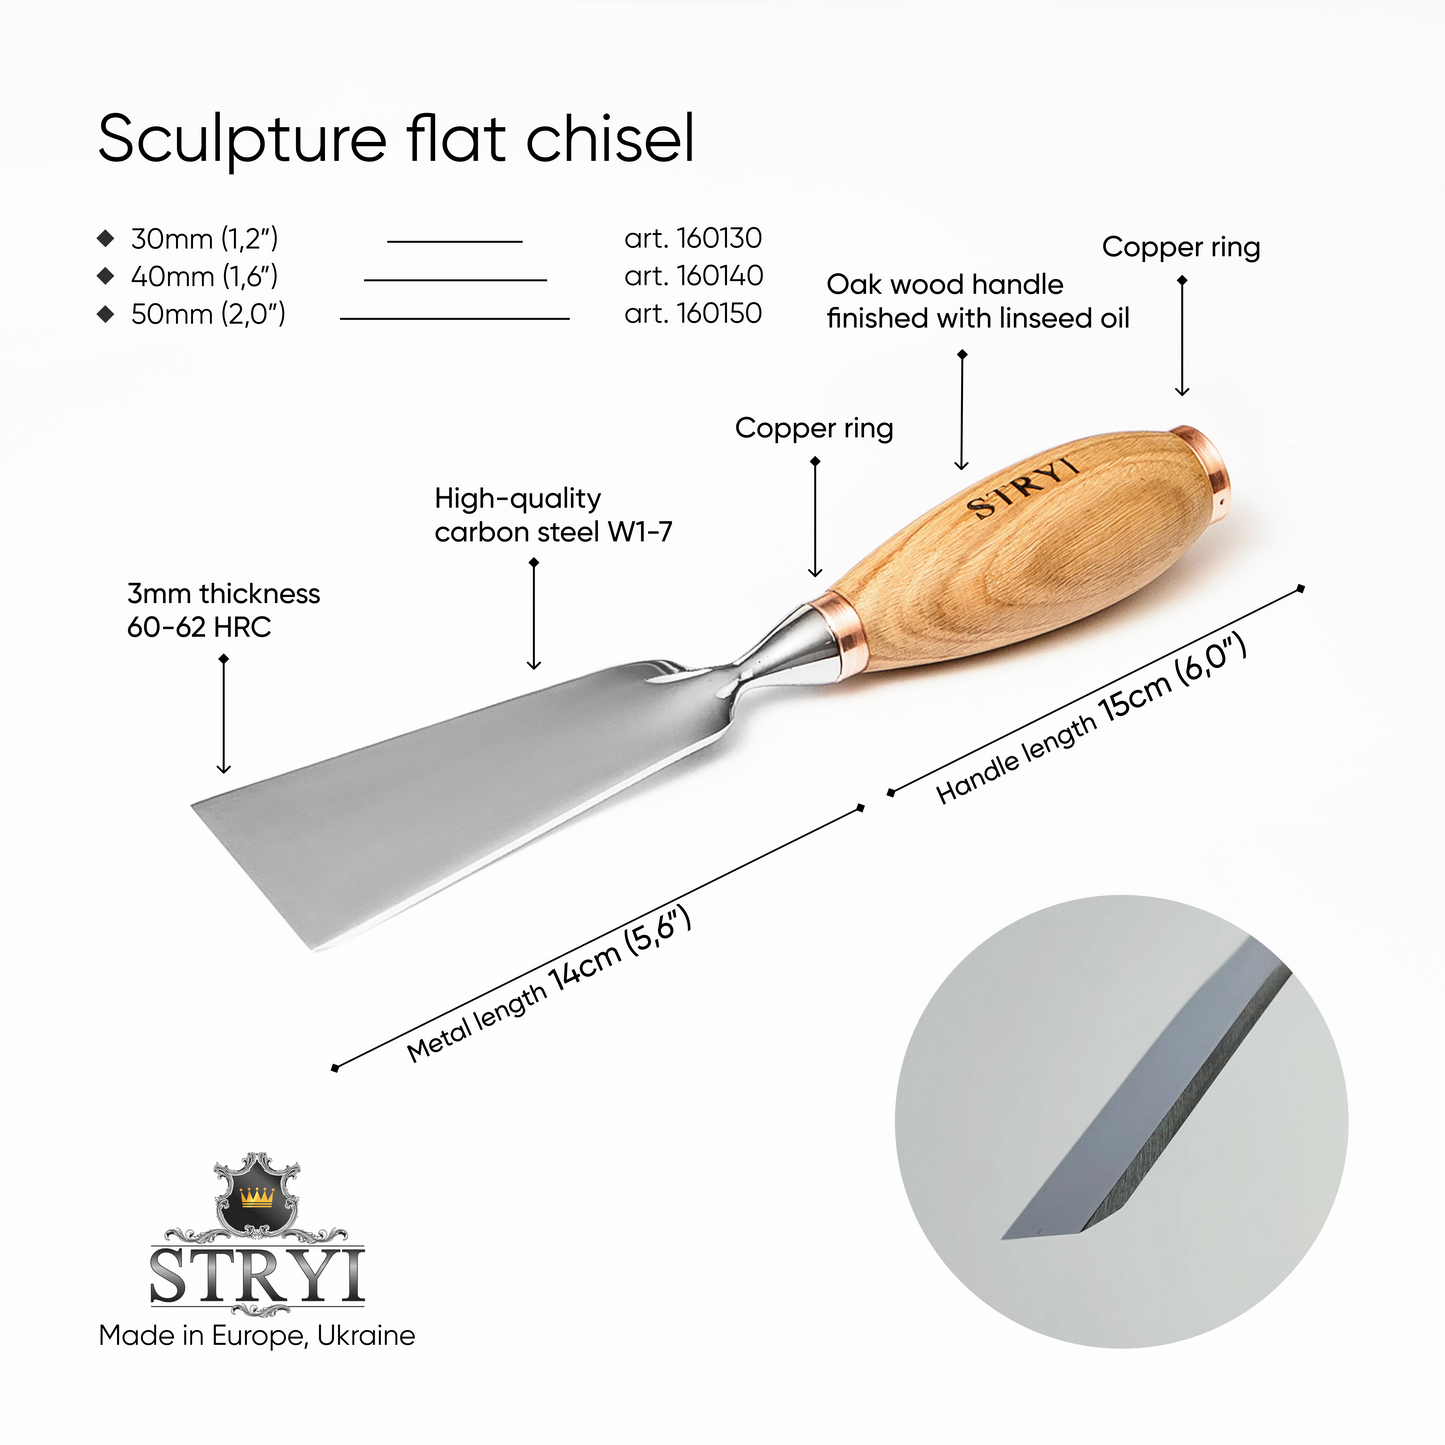 Large sculpture chisel, 1 profile, Flat Heavy duty gouge STRYI Profi, Flat gouges, Making furniture,  sculpting tools